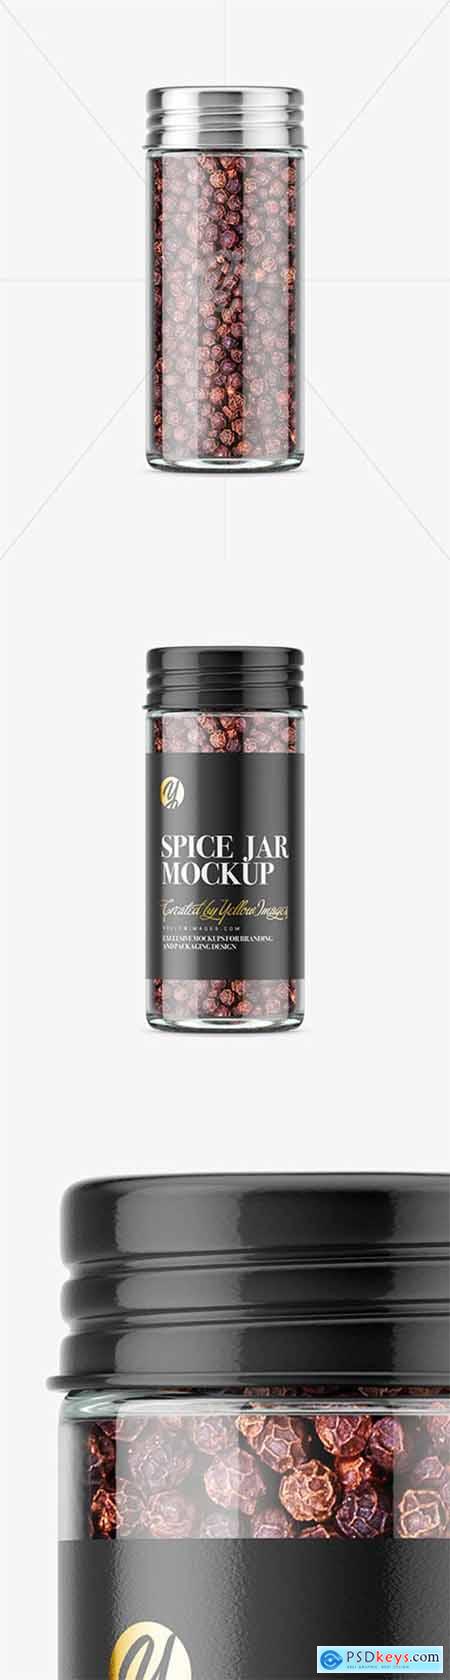 Spice Jar with Black Pepper Mockup 80580